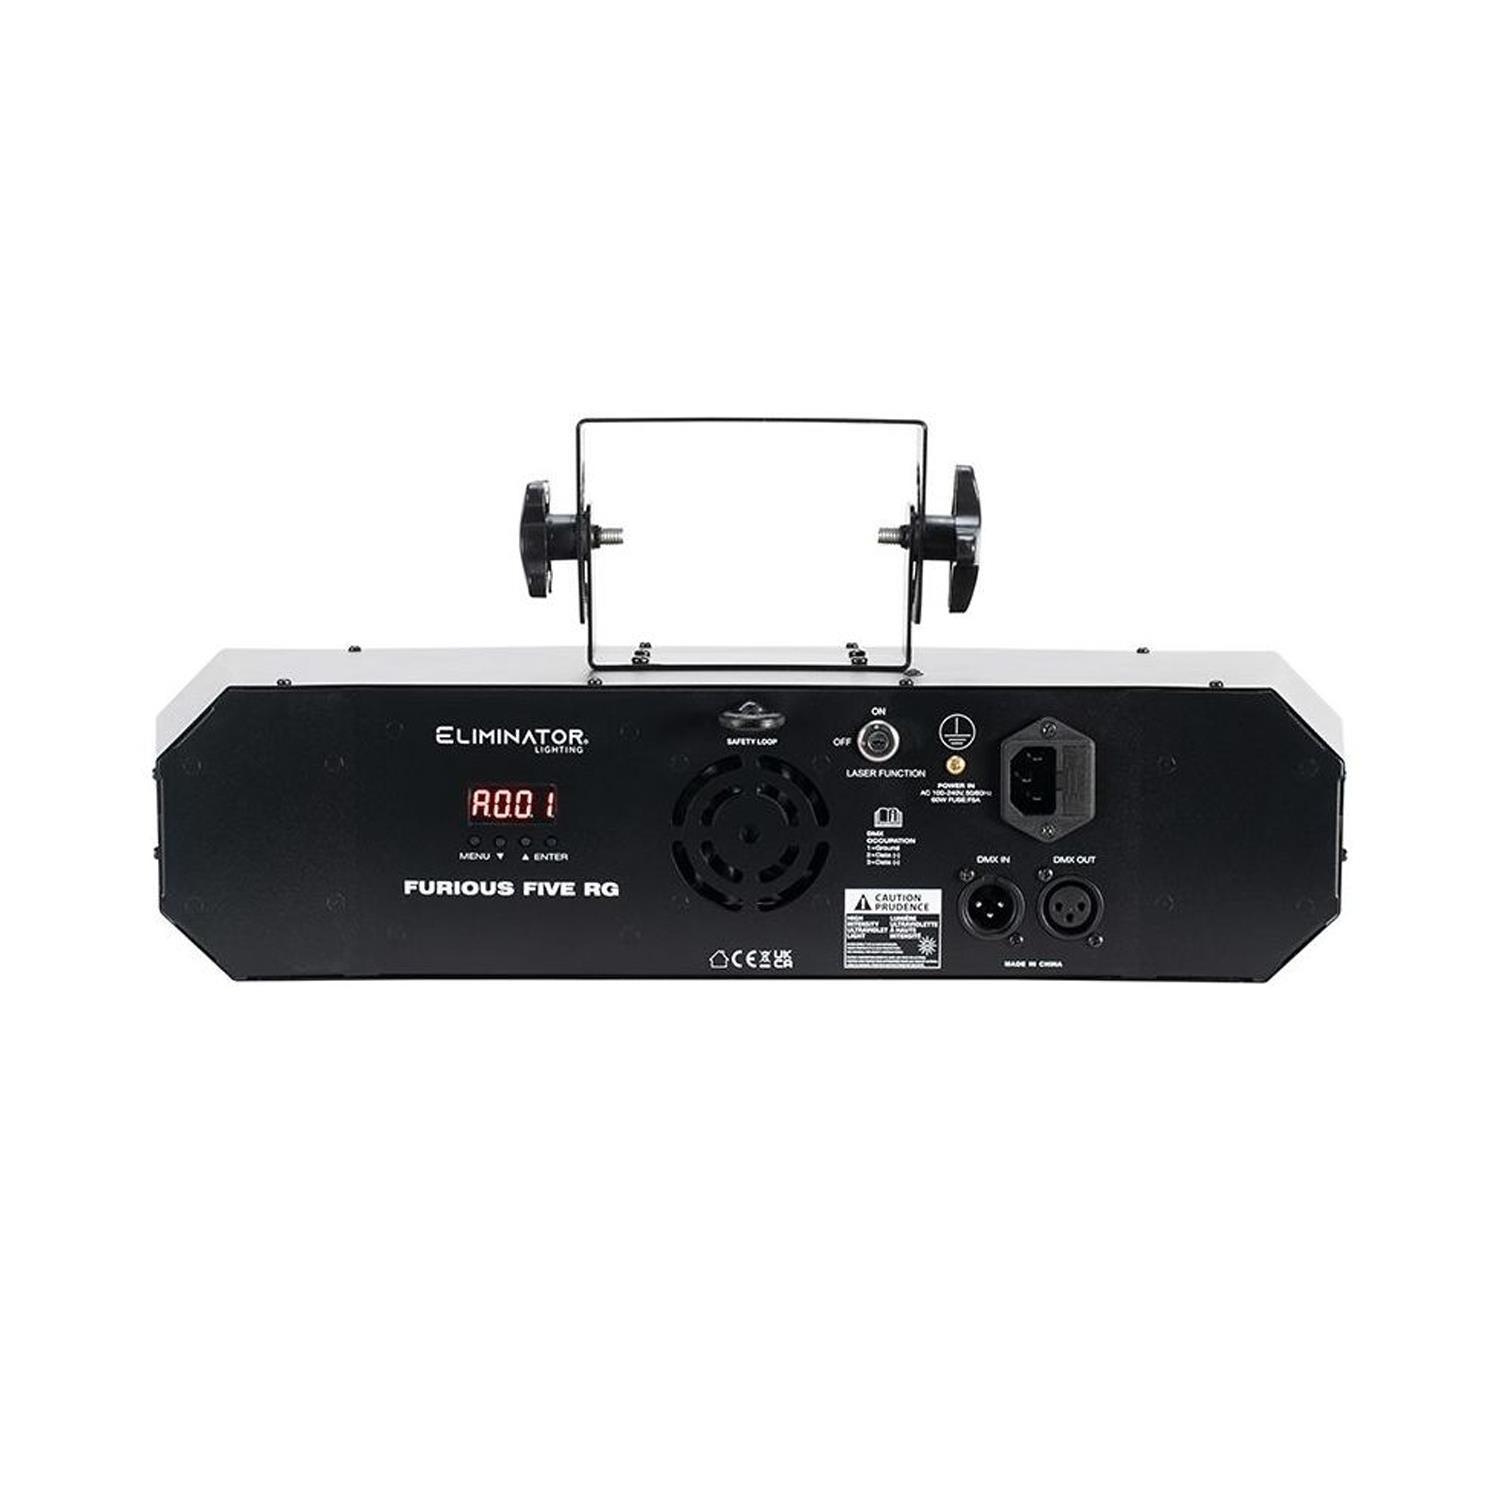 ADJ Eliminator Lighting Furious Five FG 5-in-1 LED Effect Light - DY Pro Audio